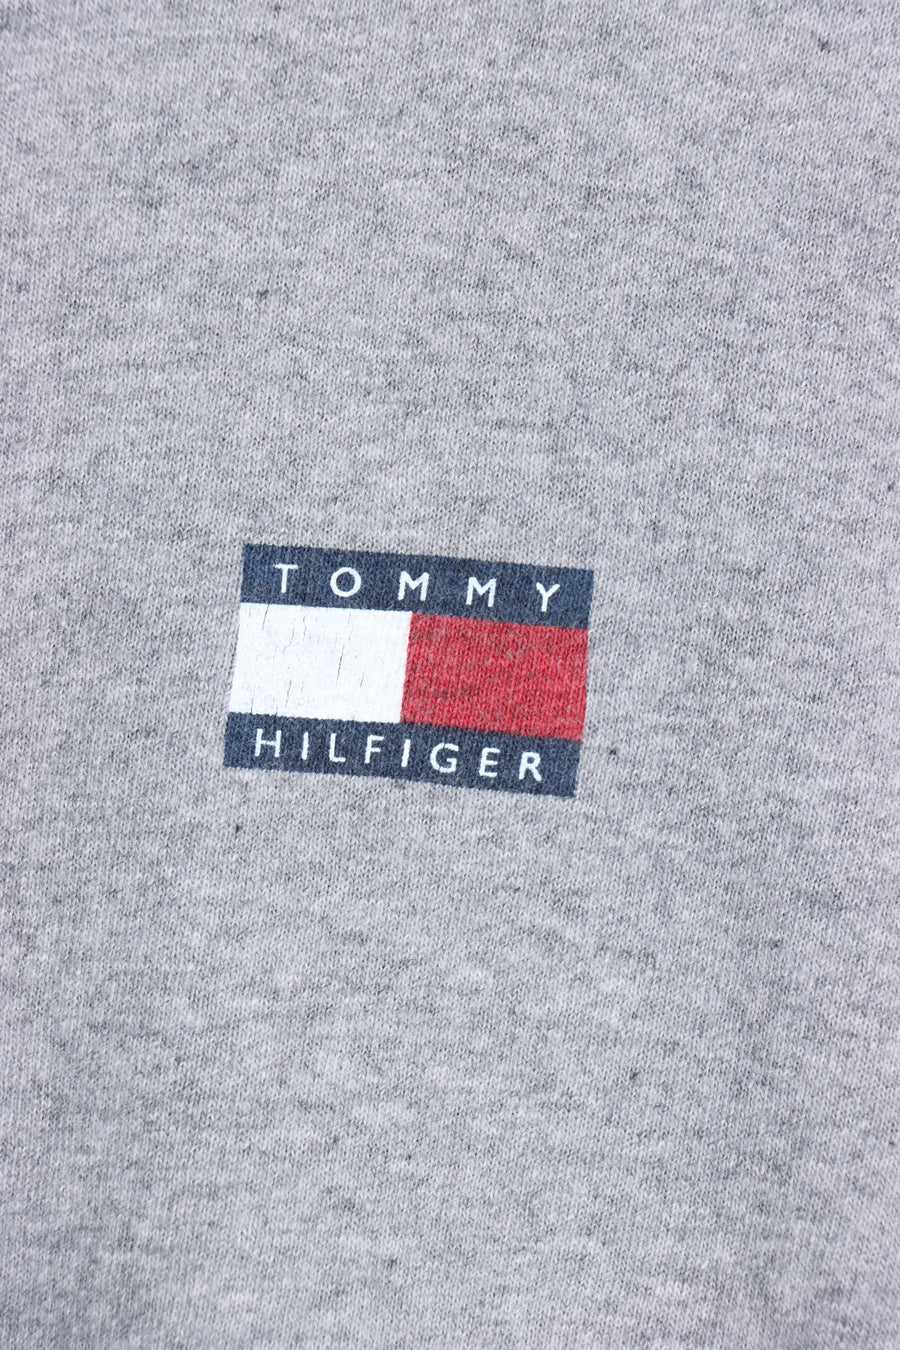 Grey TOMMY HILFIGER USA Made Logo T-Shirt (XL)